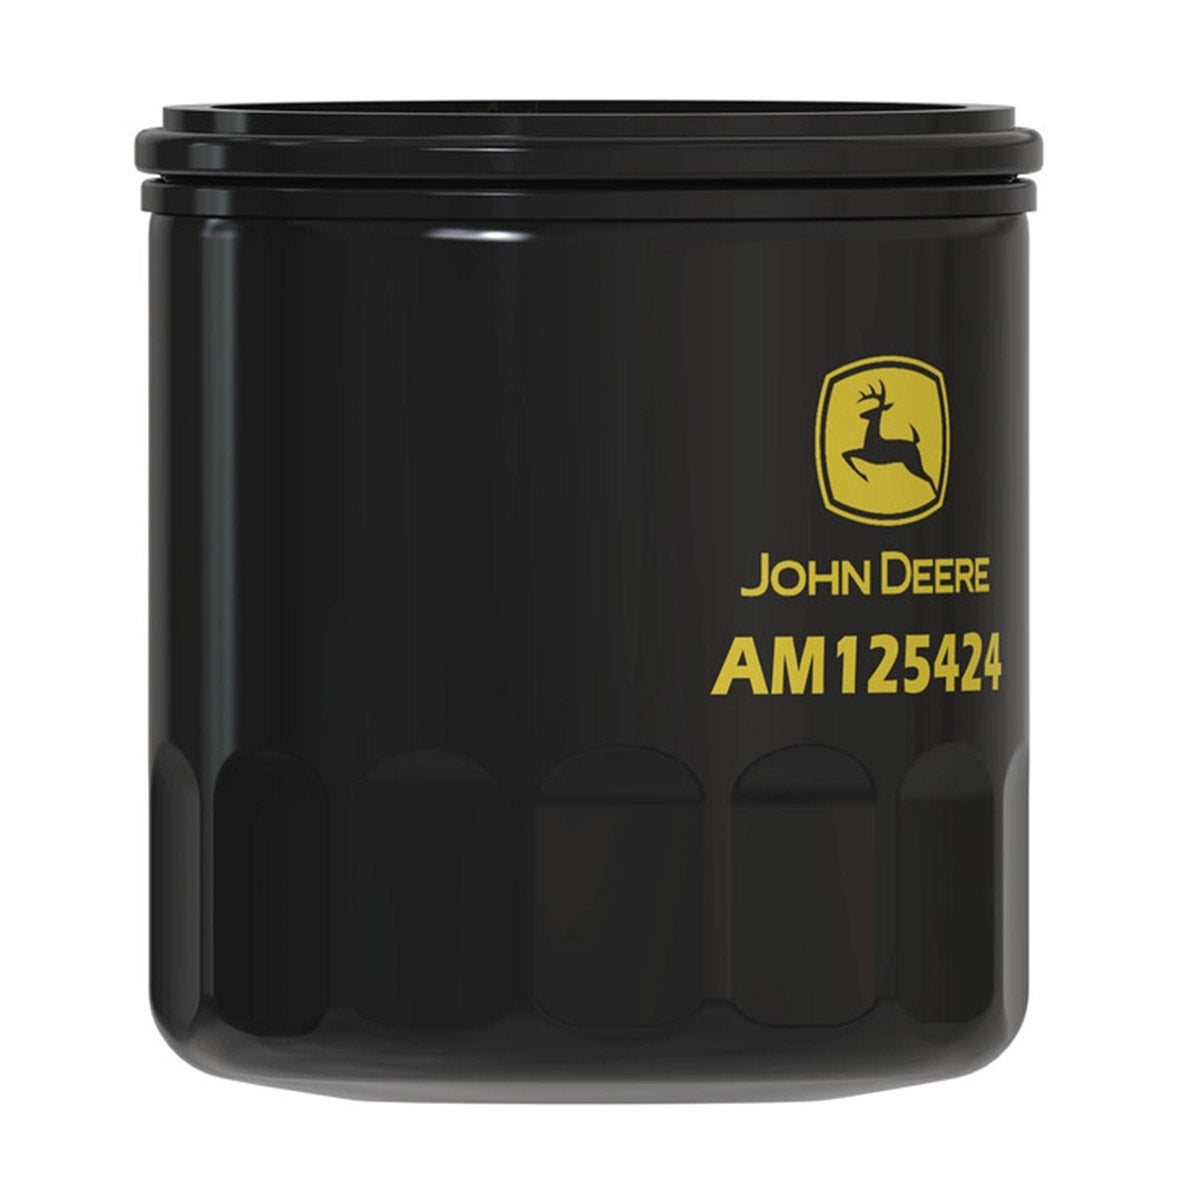 John Deere Engine Oil Filter for Ride-On Mowers, ZTrack Mowers & Gators - AM125424